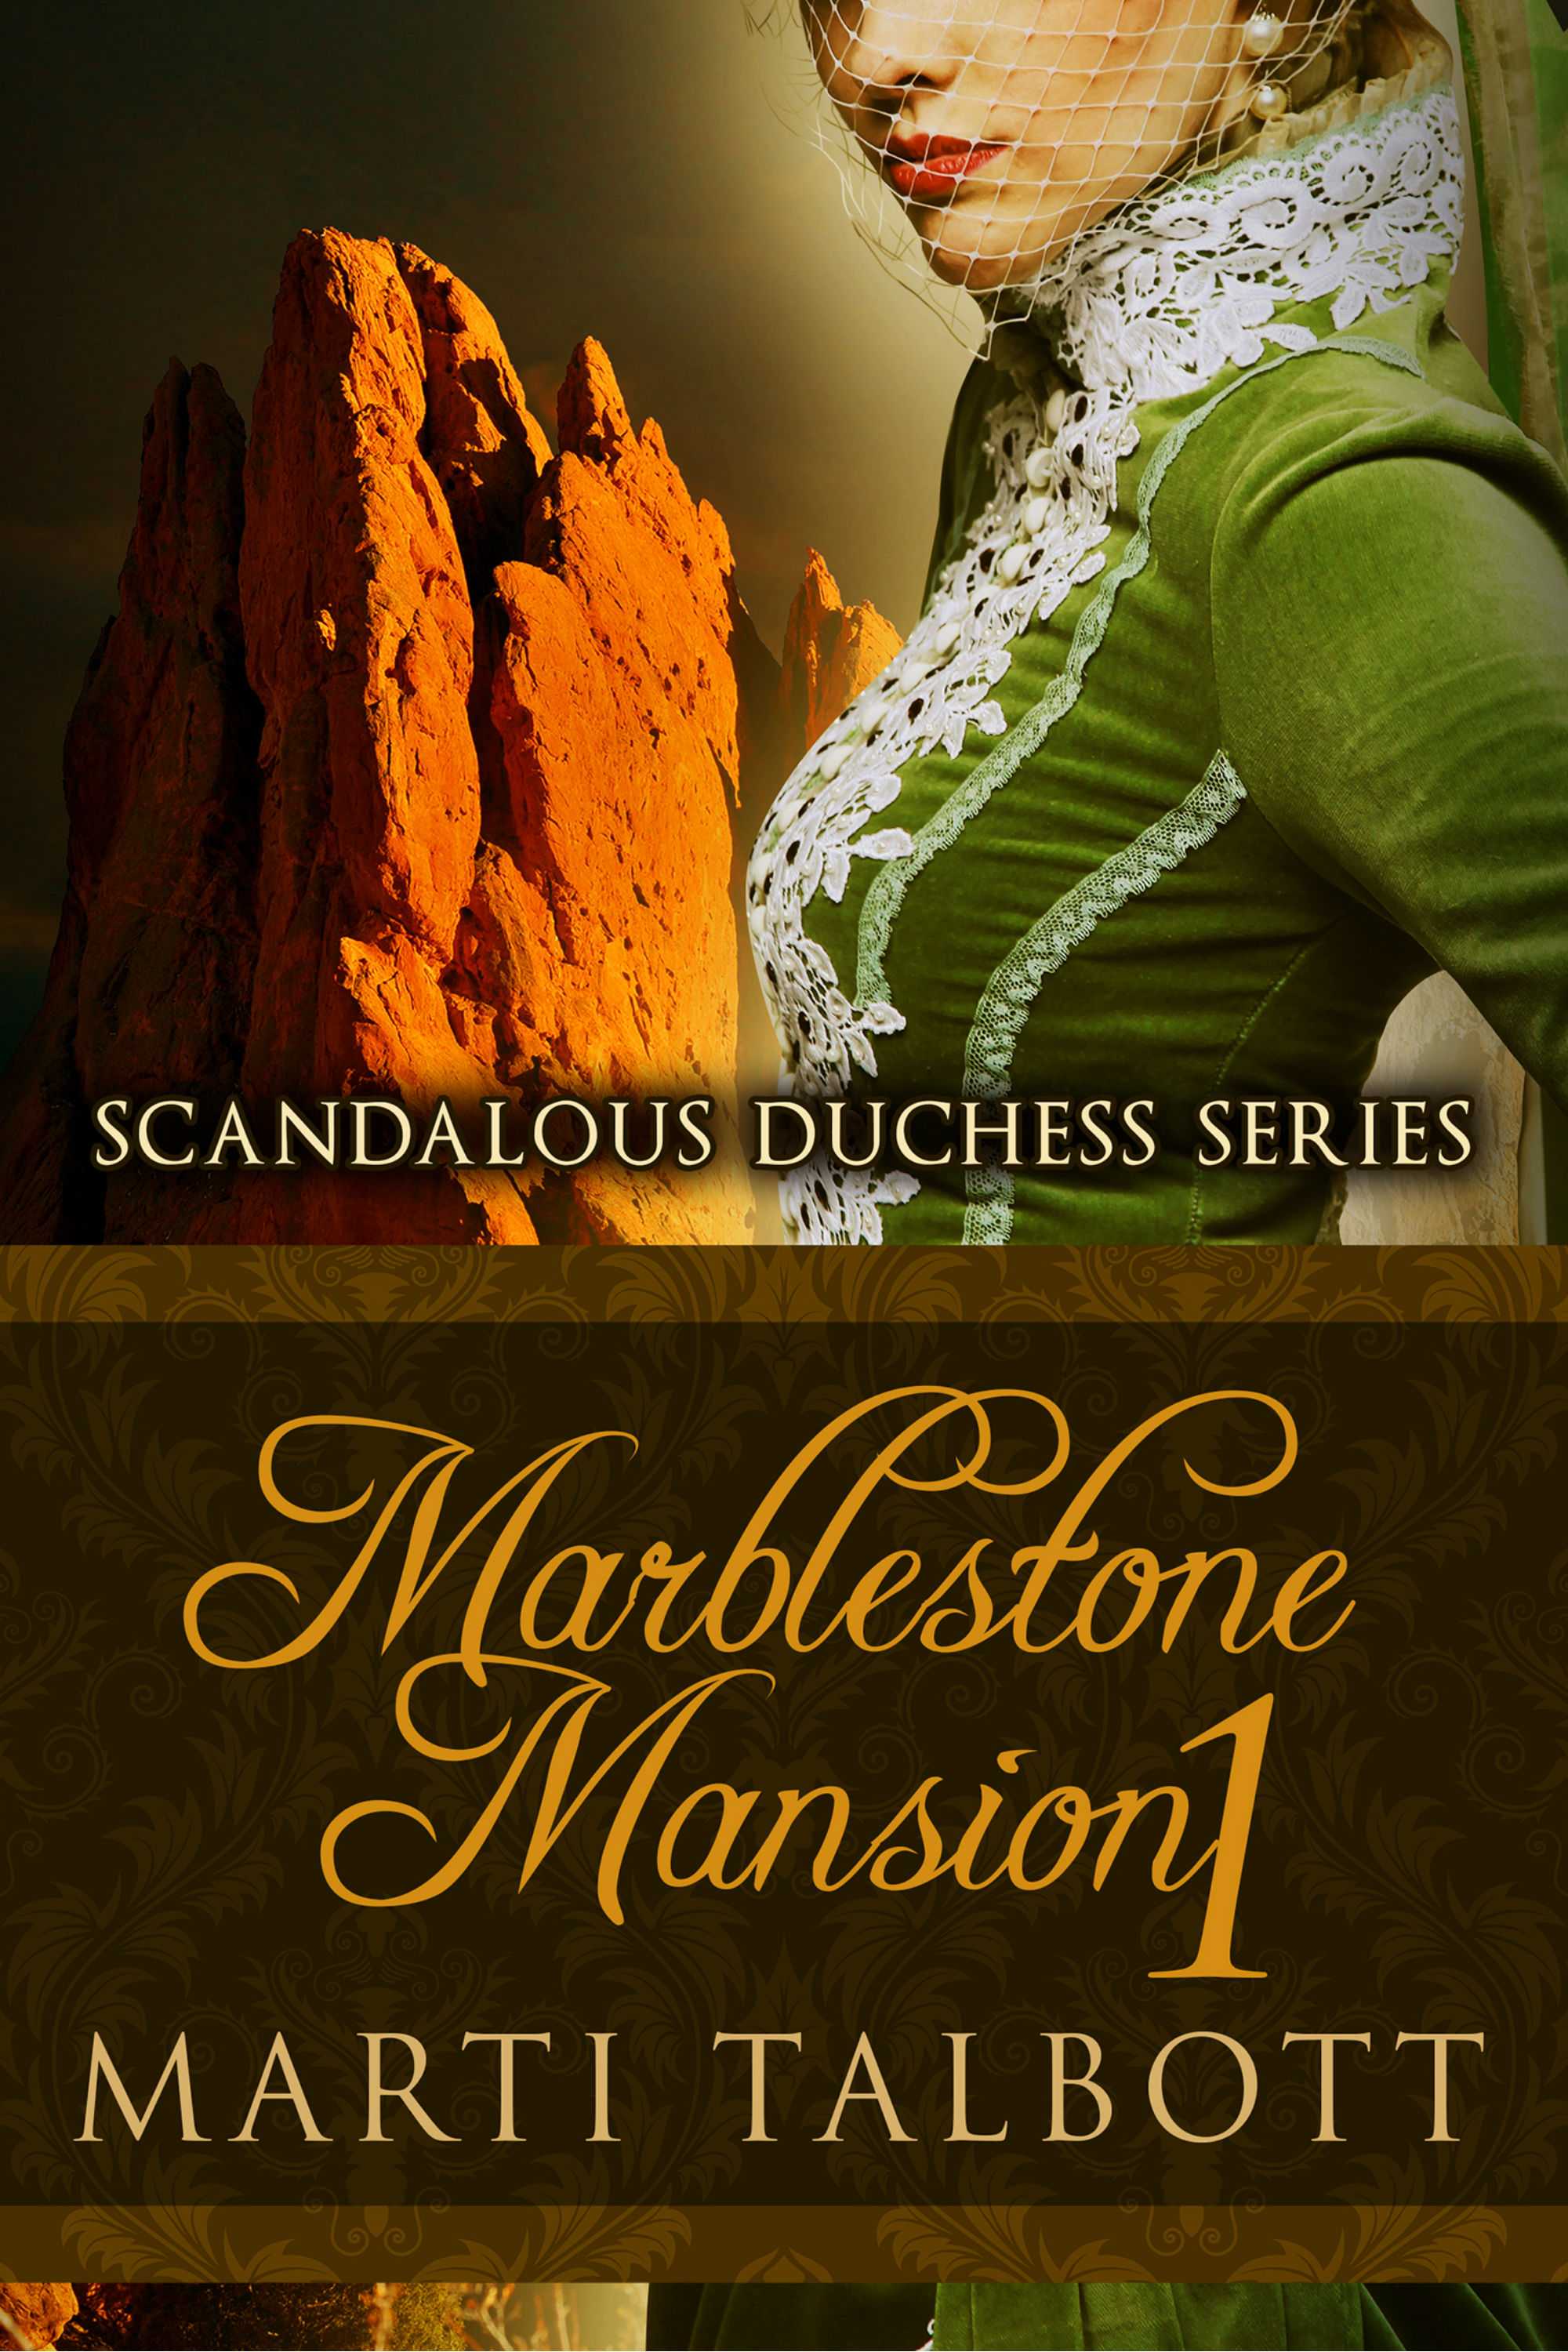 Marblestone Mansion (Scandalous Duchess Series) Book 1